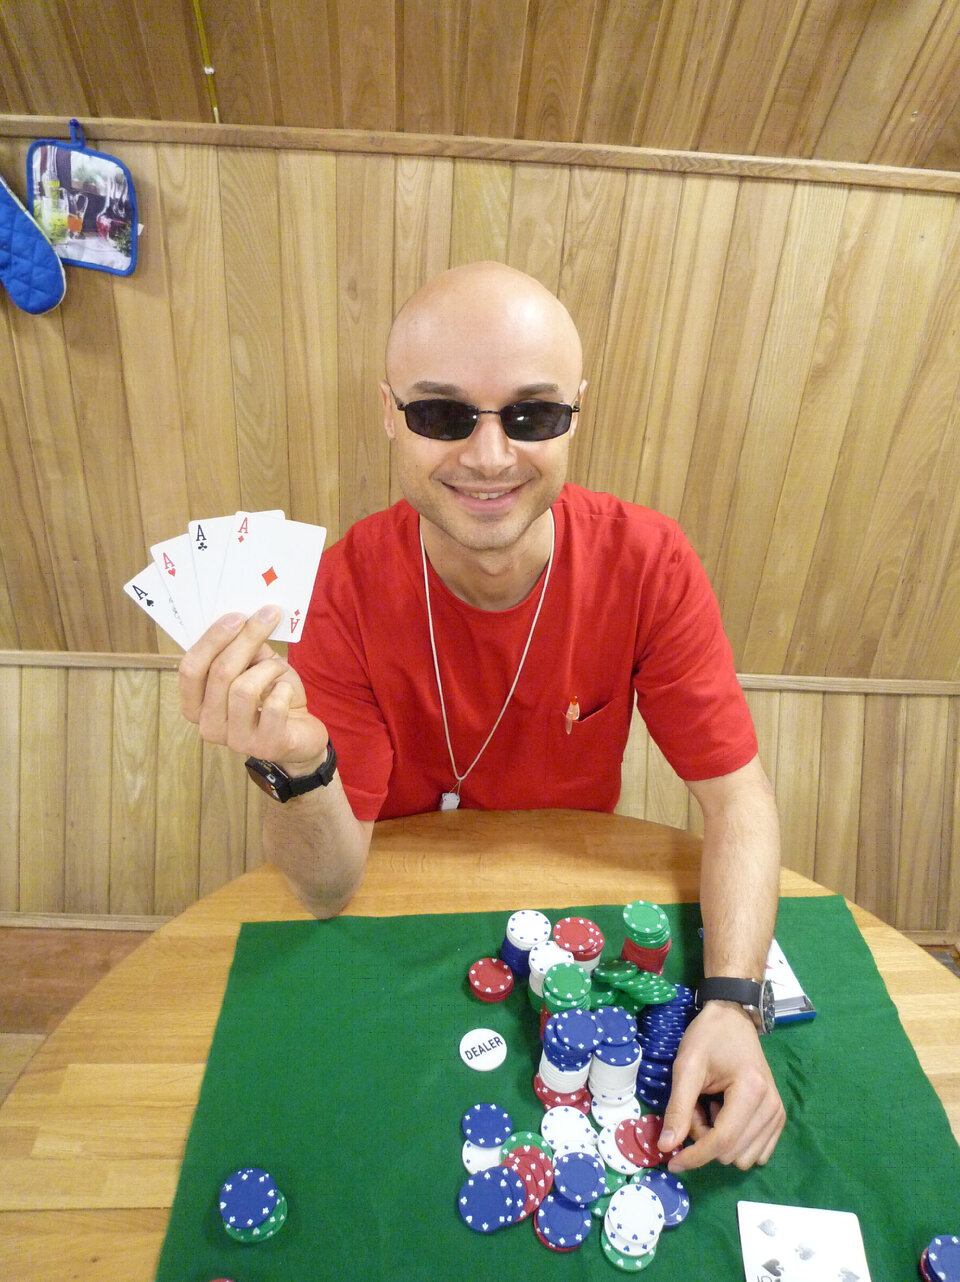 Cyrille winning at poker